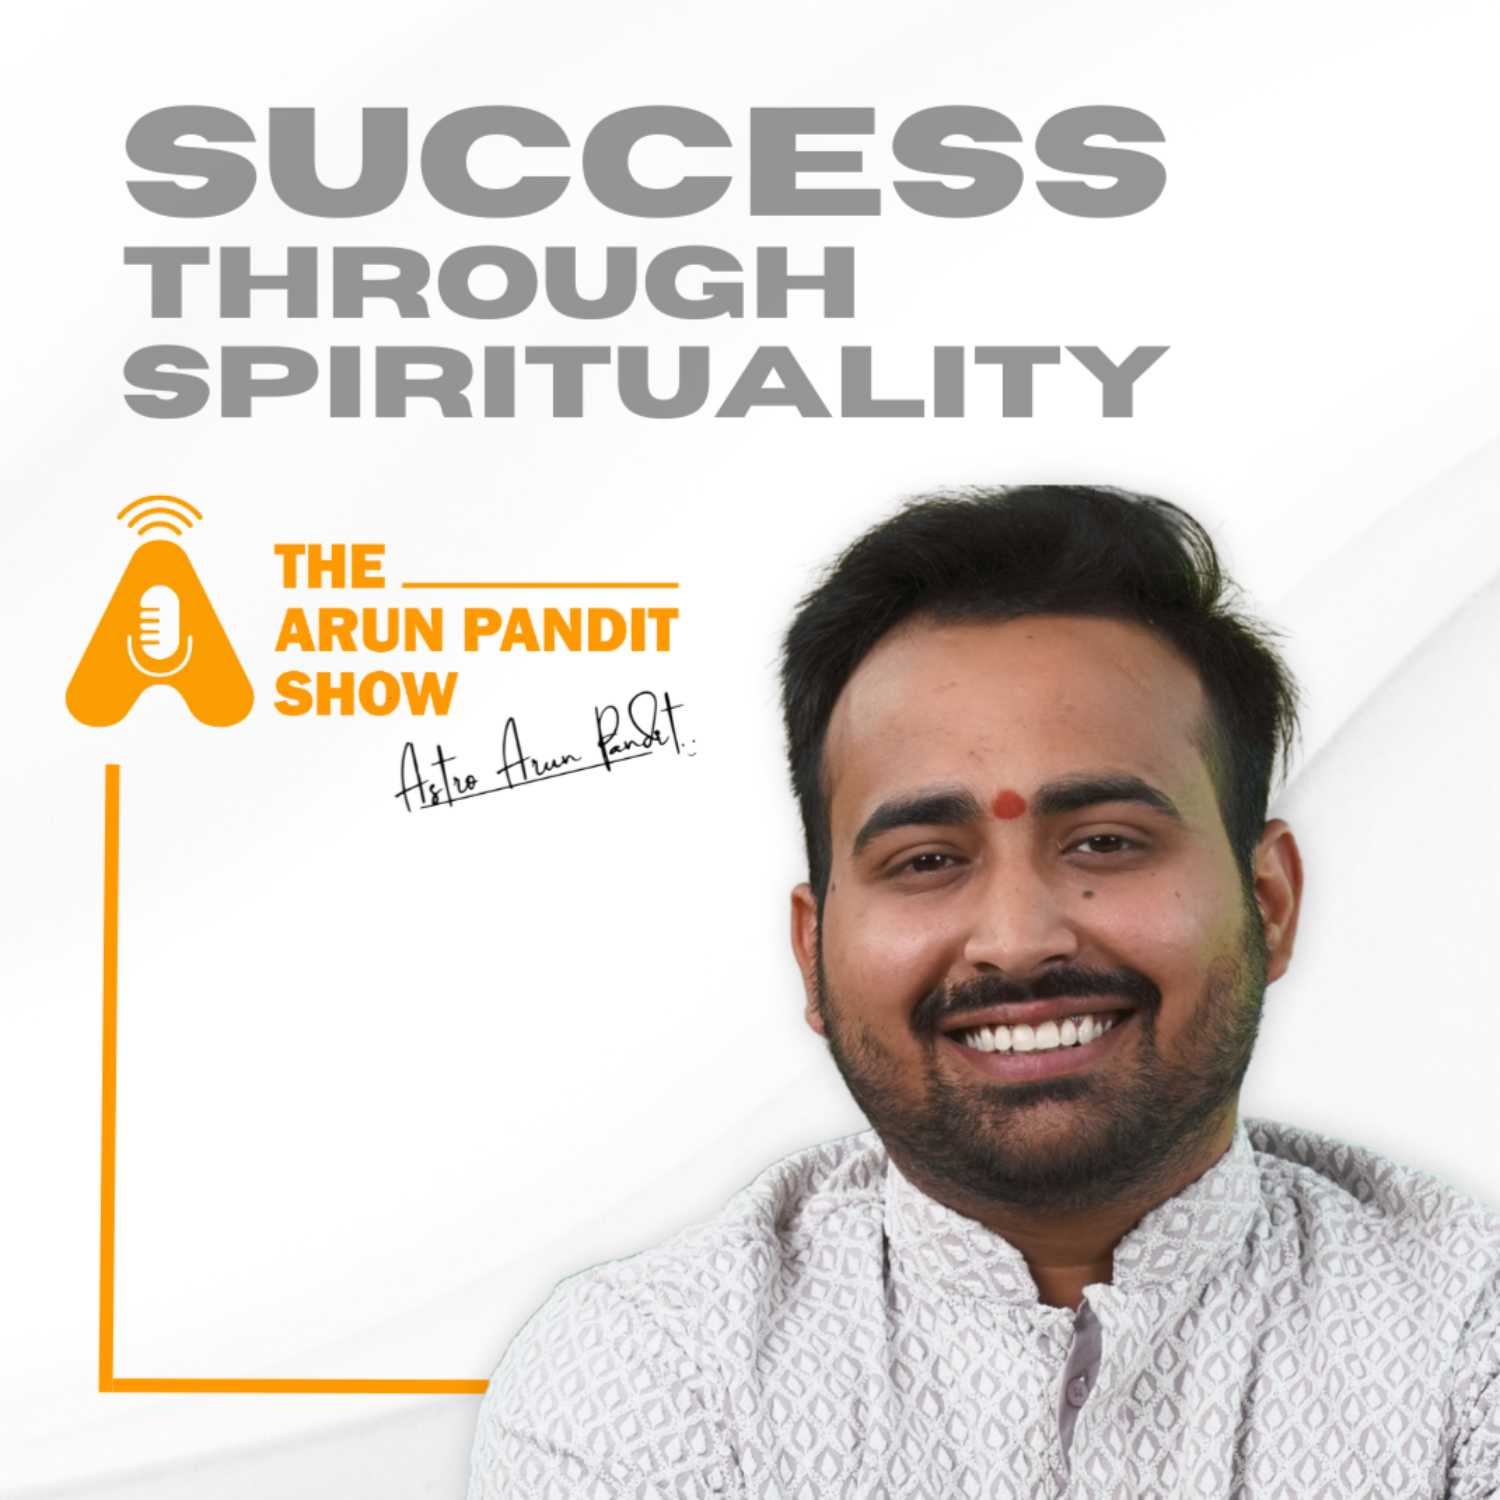 The Arun Pandit Show